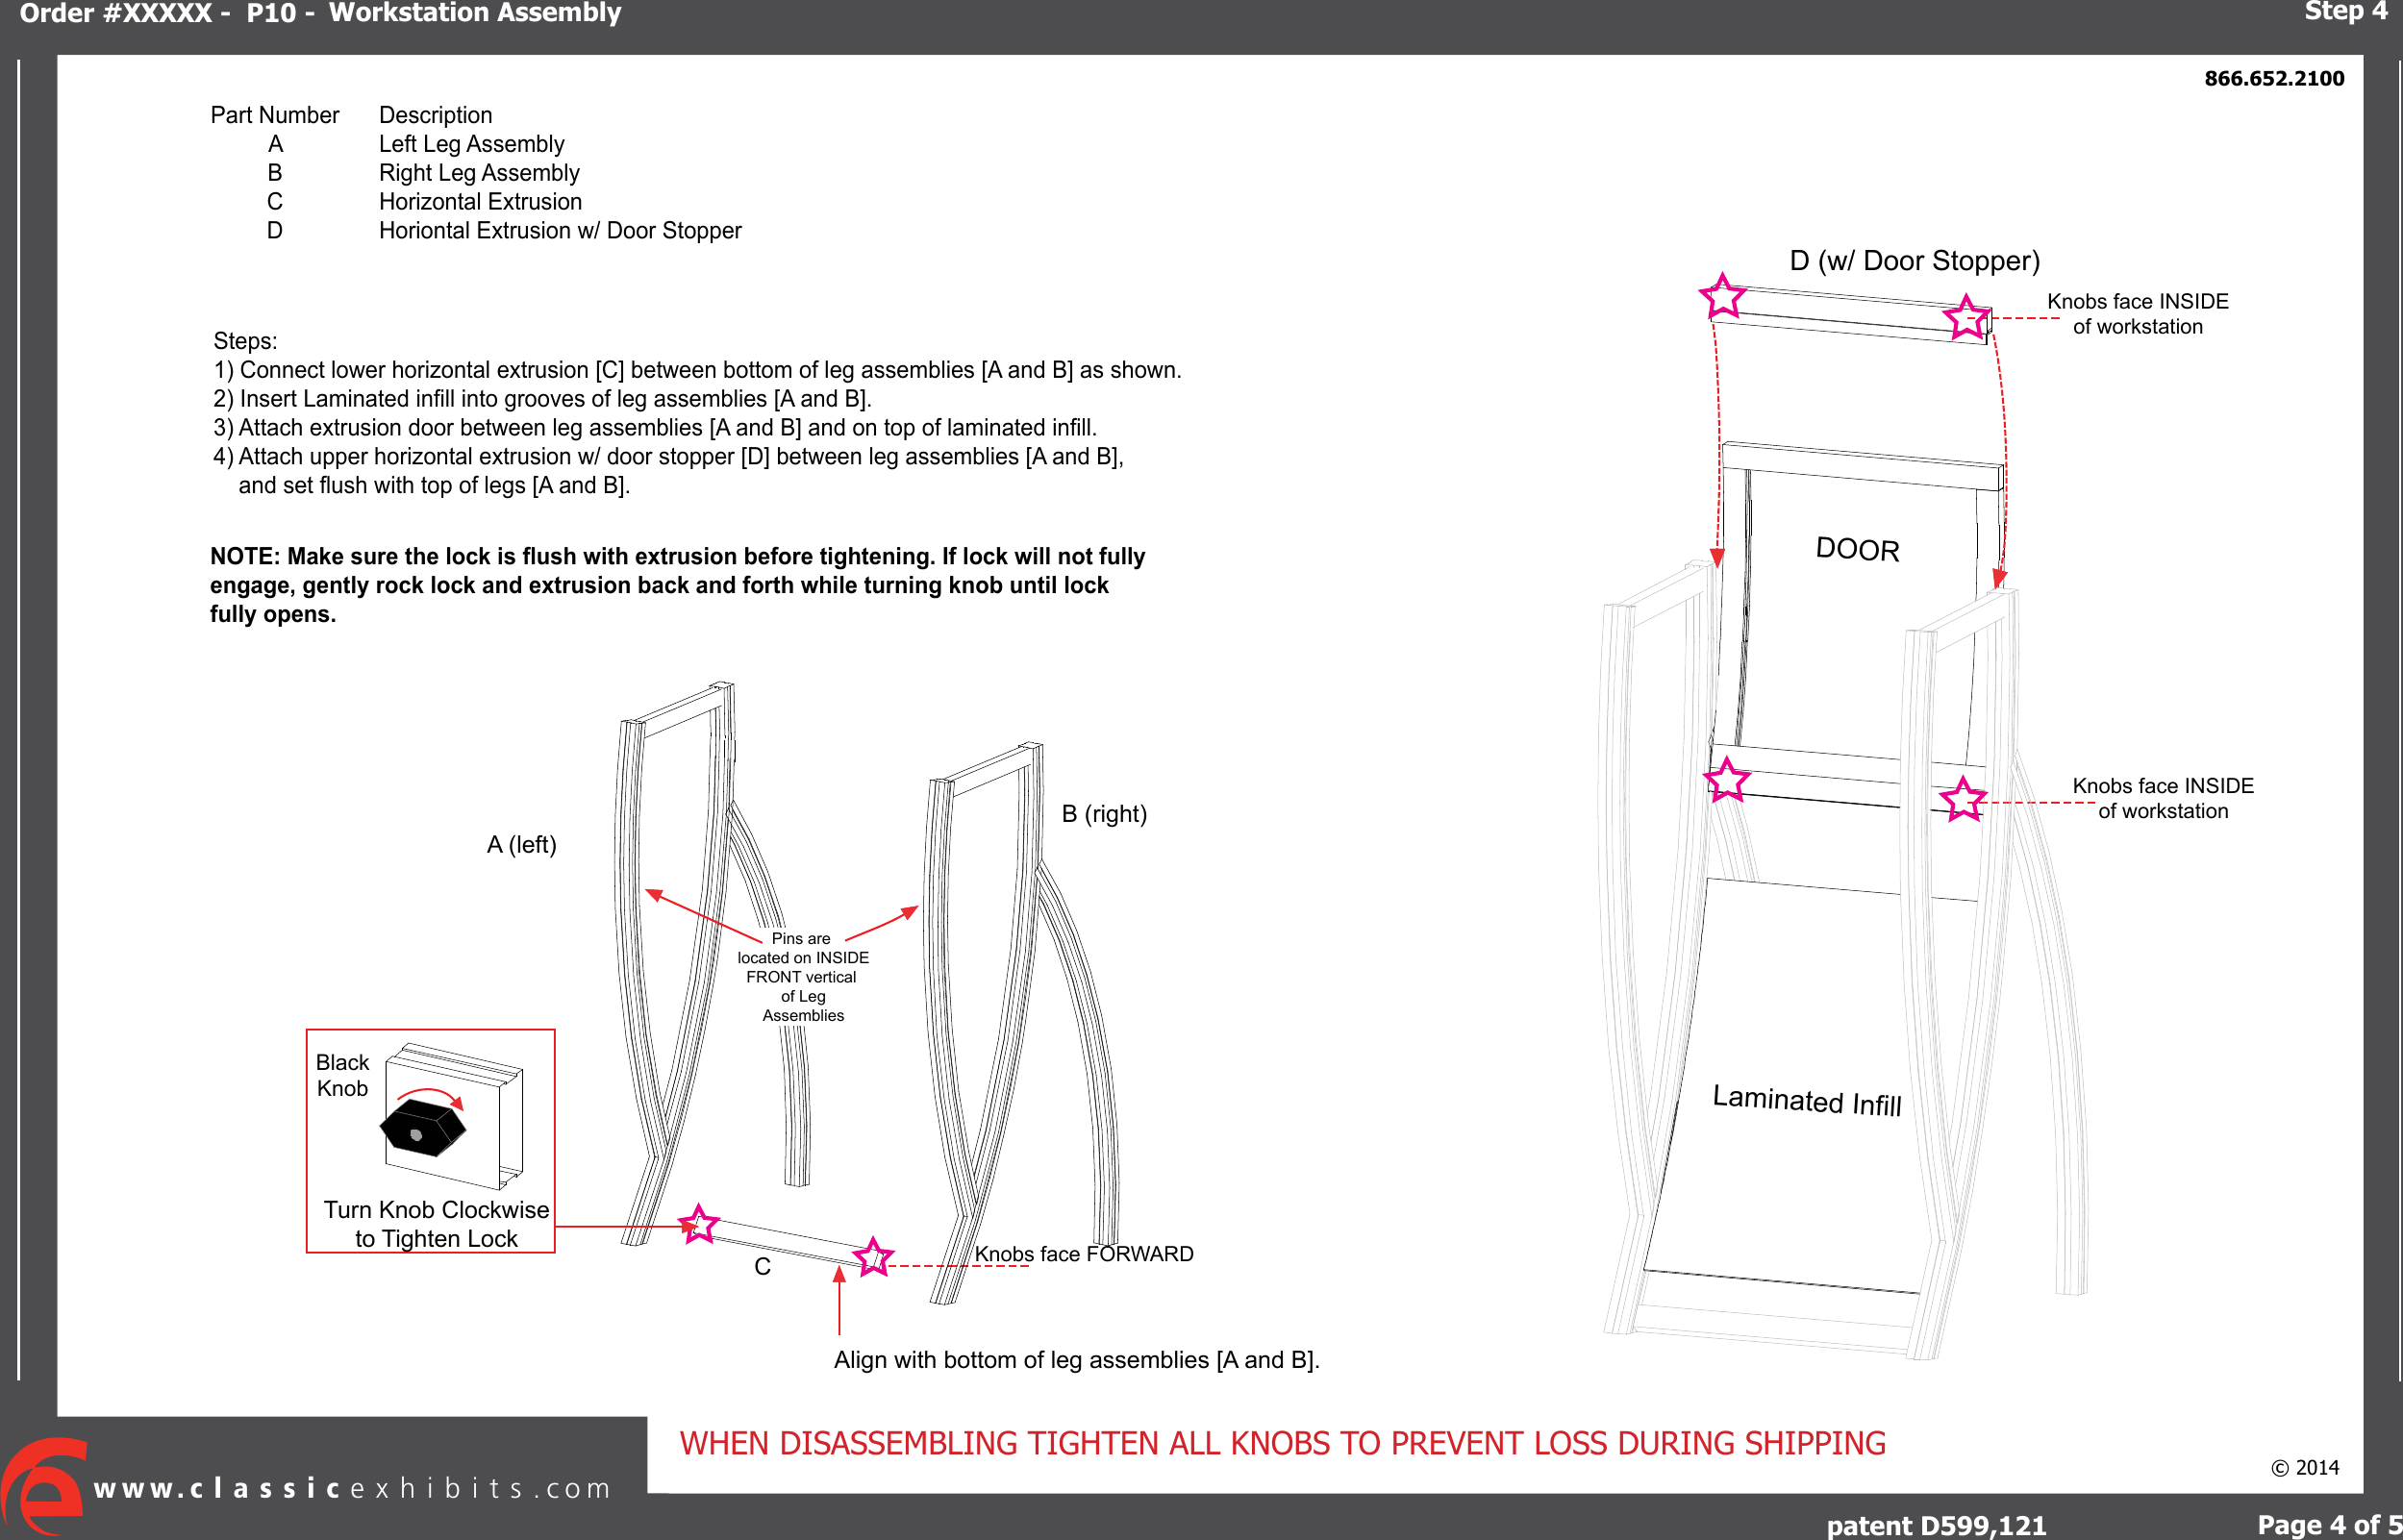 Page 5 of 9 - Perfect-10-issa-hybrid-exhibit-kit-vk-1508-setup-instructions